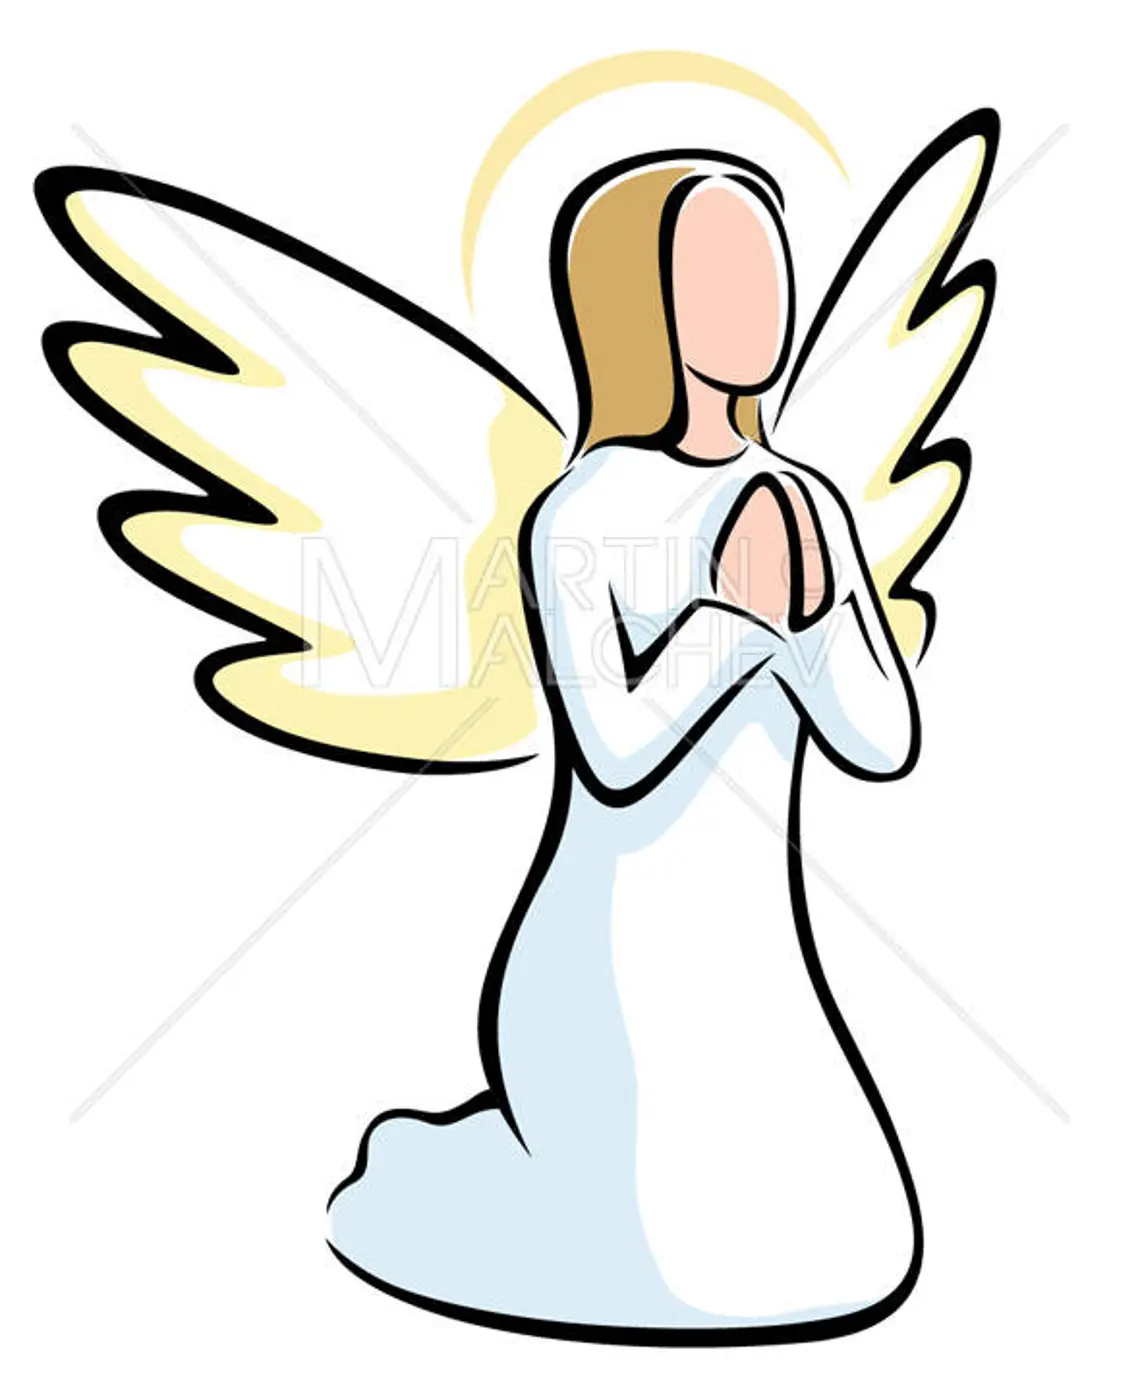 Prayer of an angel with a nimbus.